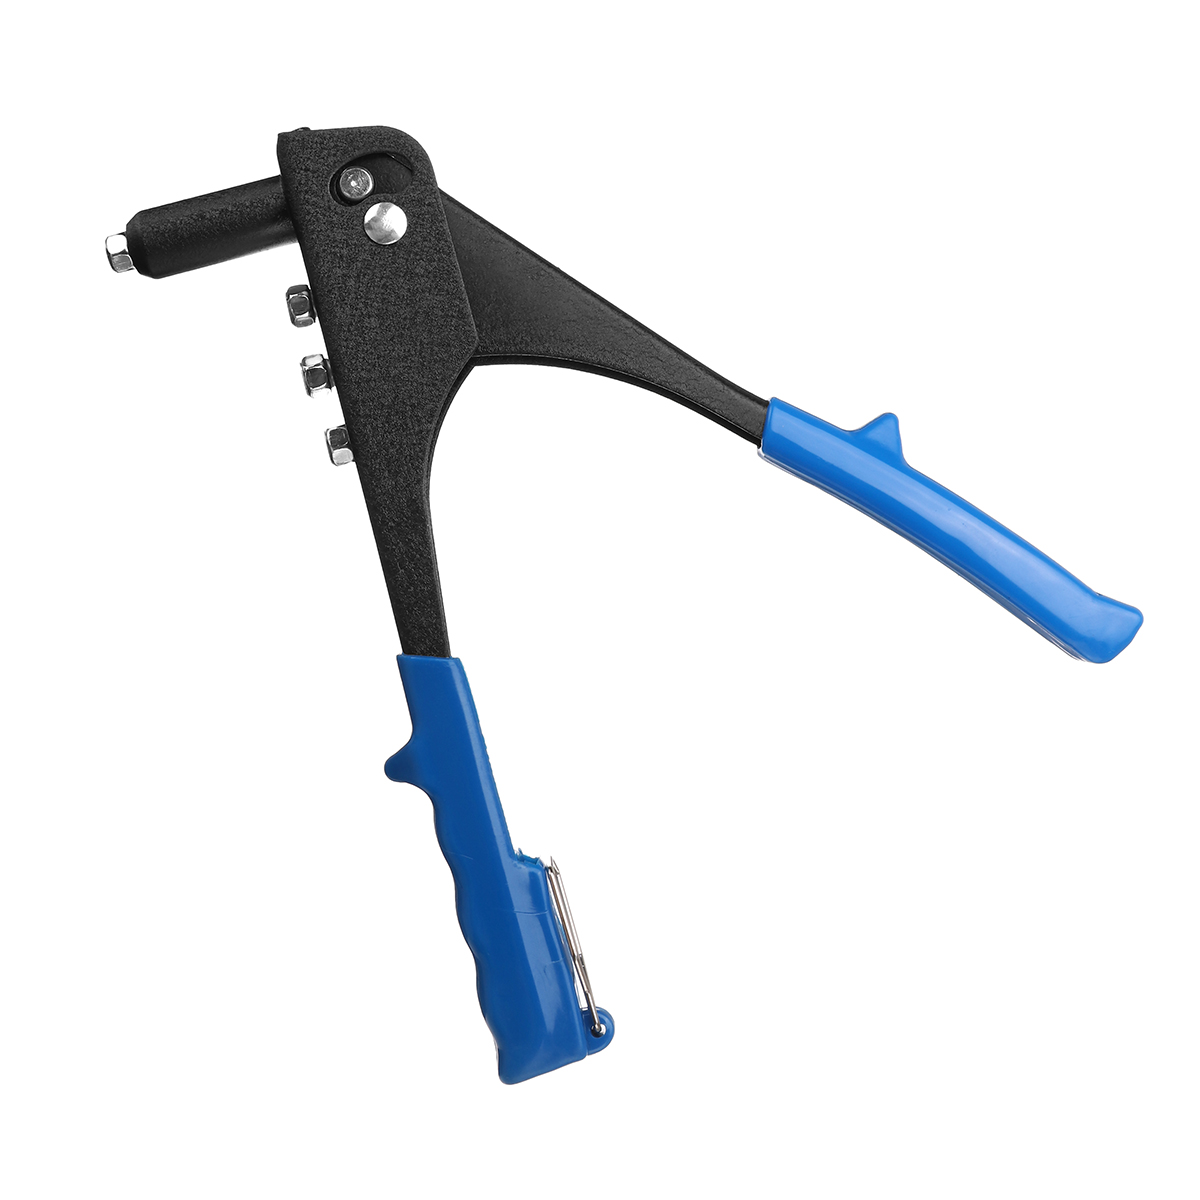 Portable-Pulling-Rivet-G-un-Blind-Rivet-Hand-Tool-with-40pcs-Rivet-For-Metal-Woodworking-1546842-4